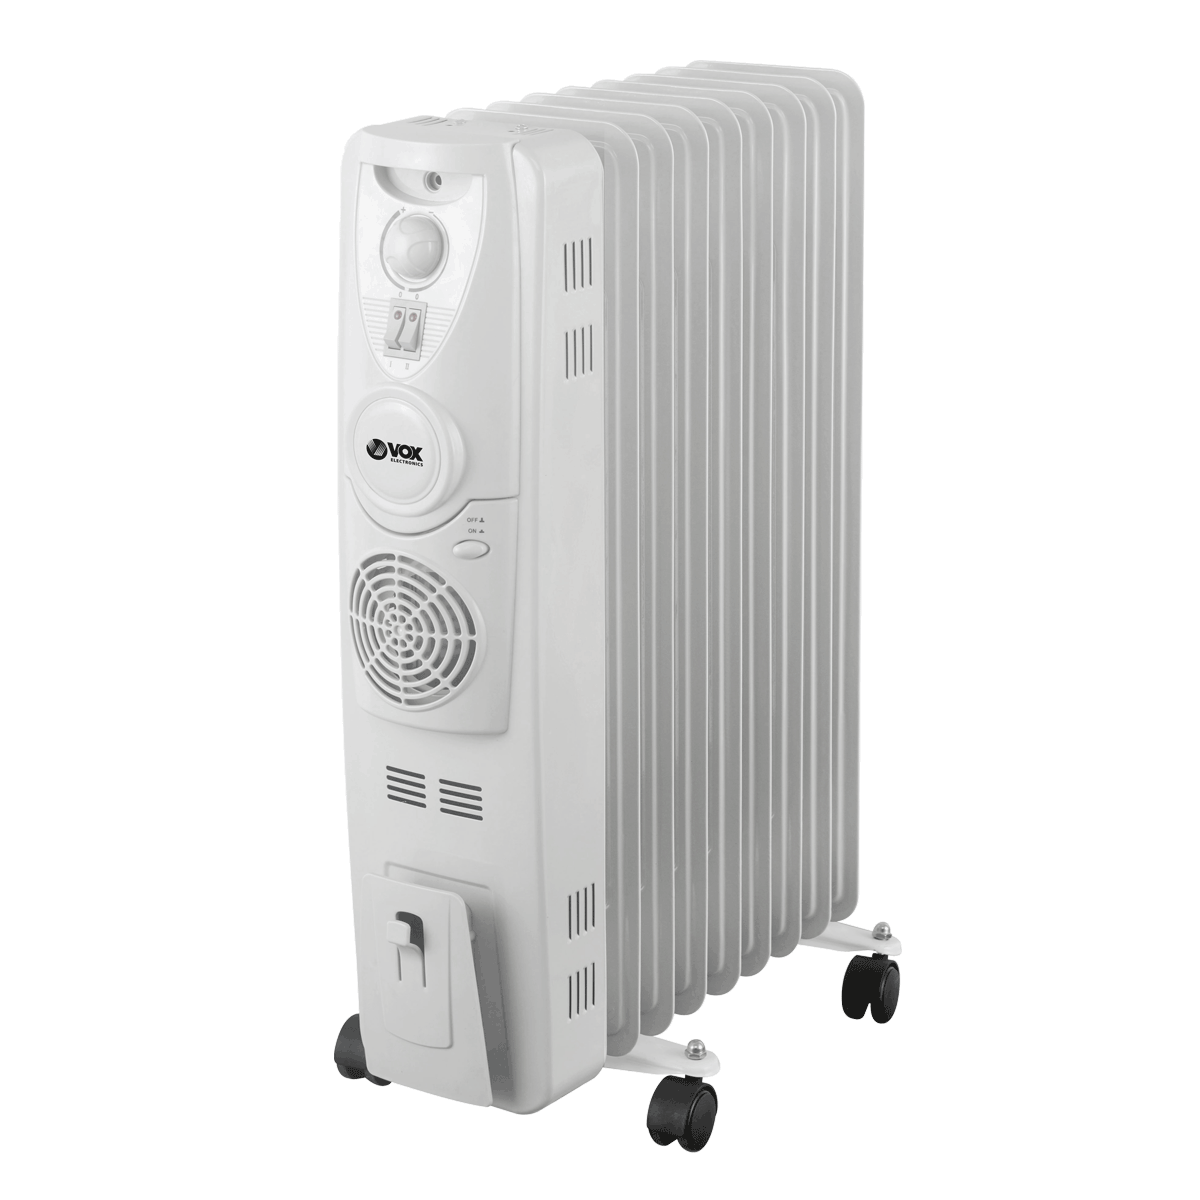 Oil radiator OH6109 